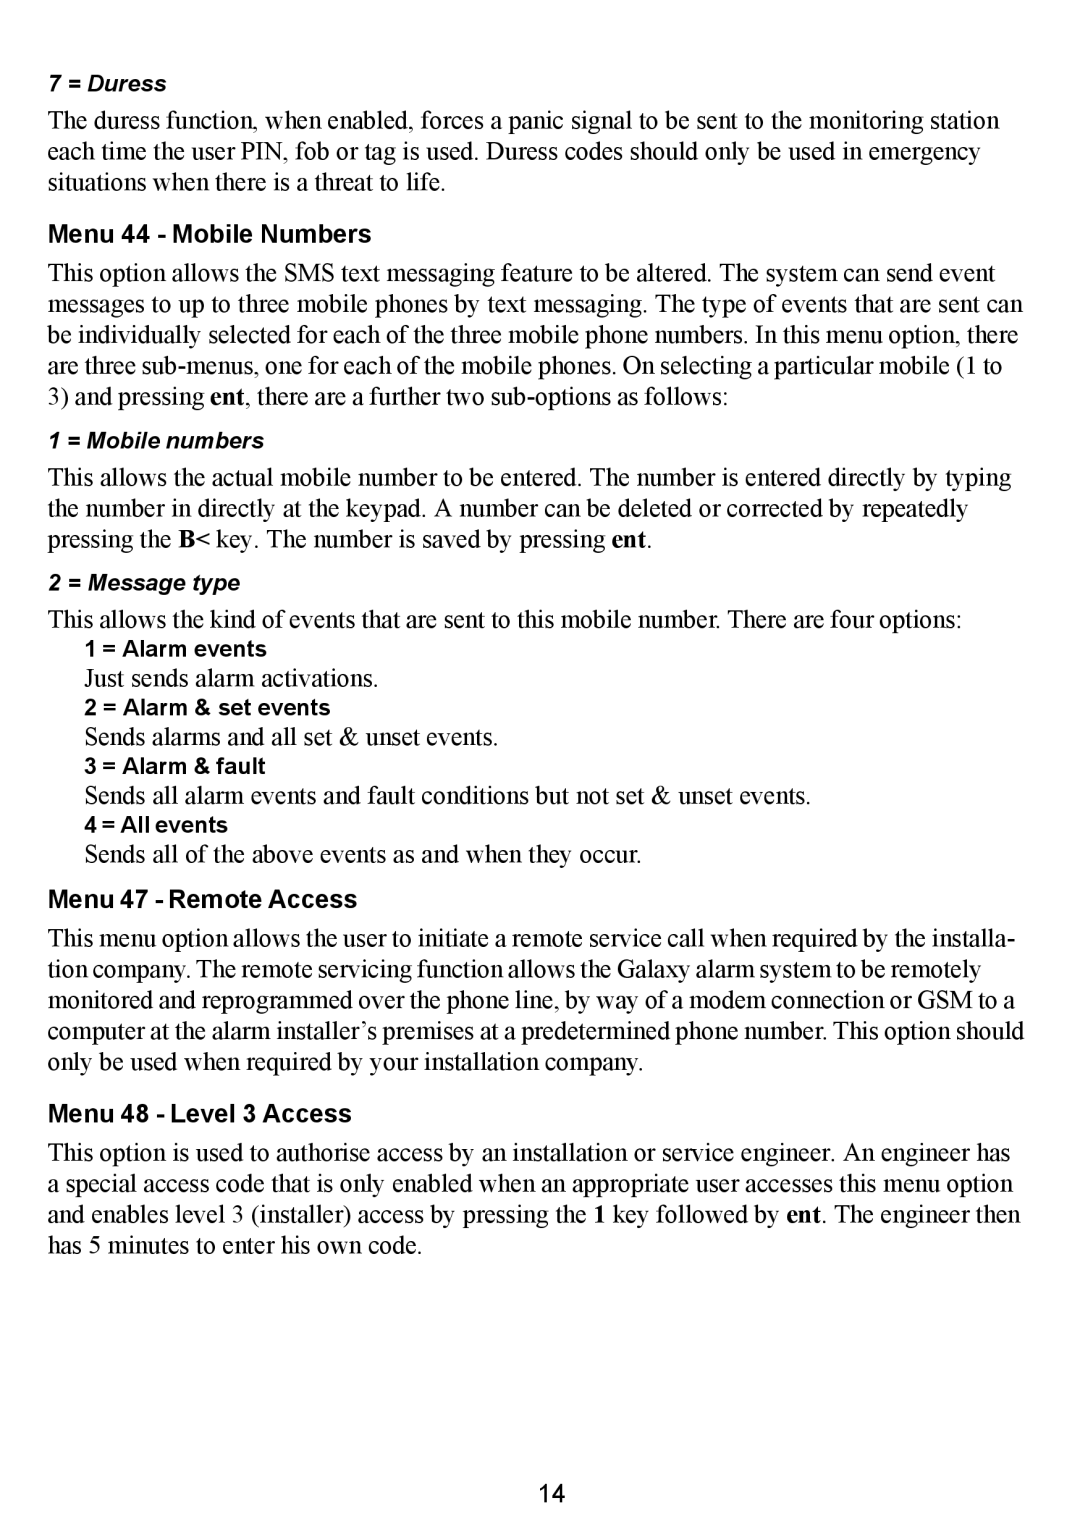 Honeywell Galaxy 2 manual Menu 44 - Mobile Numbers, Menu 47 - Remote Access, Menu 48 - Level 3 Access 